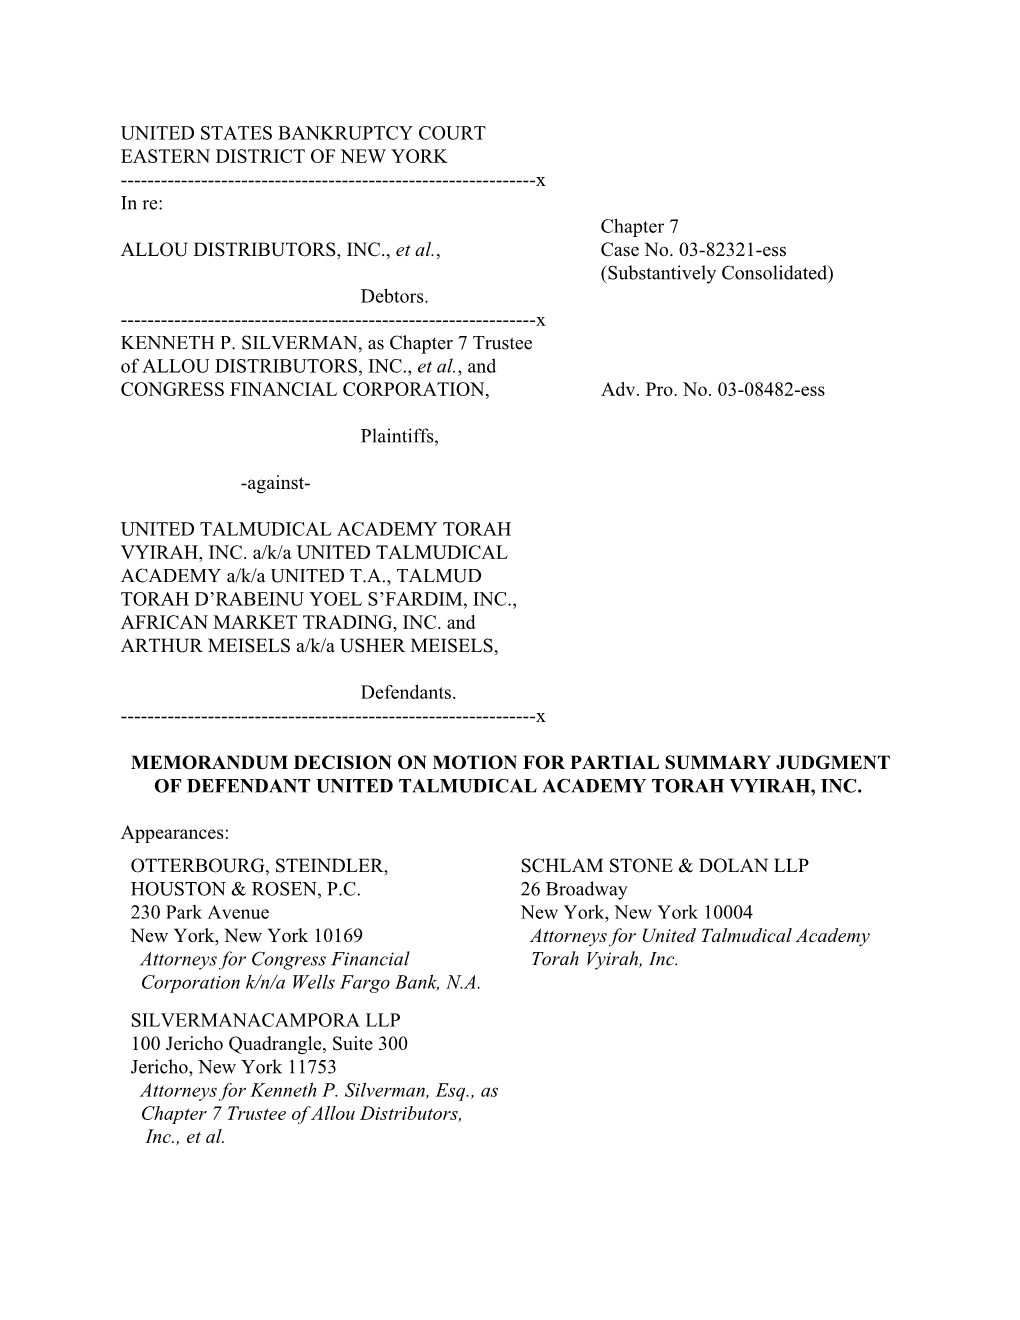 Memorandum Decision on Motion for Partial Summary Judgment of Defendant United Talmudical Academy Torah Vyirah, Inc